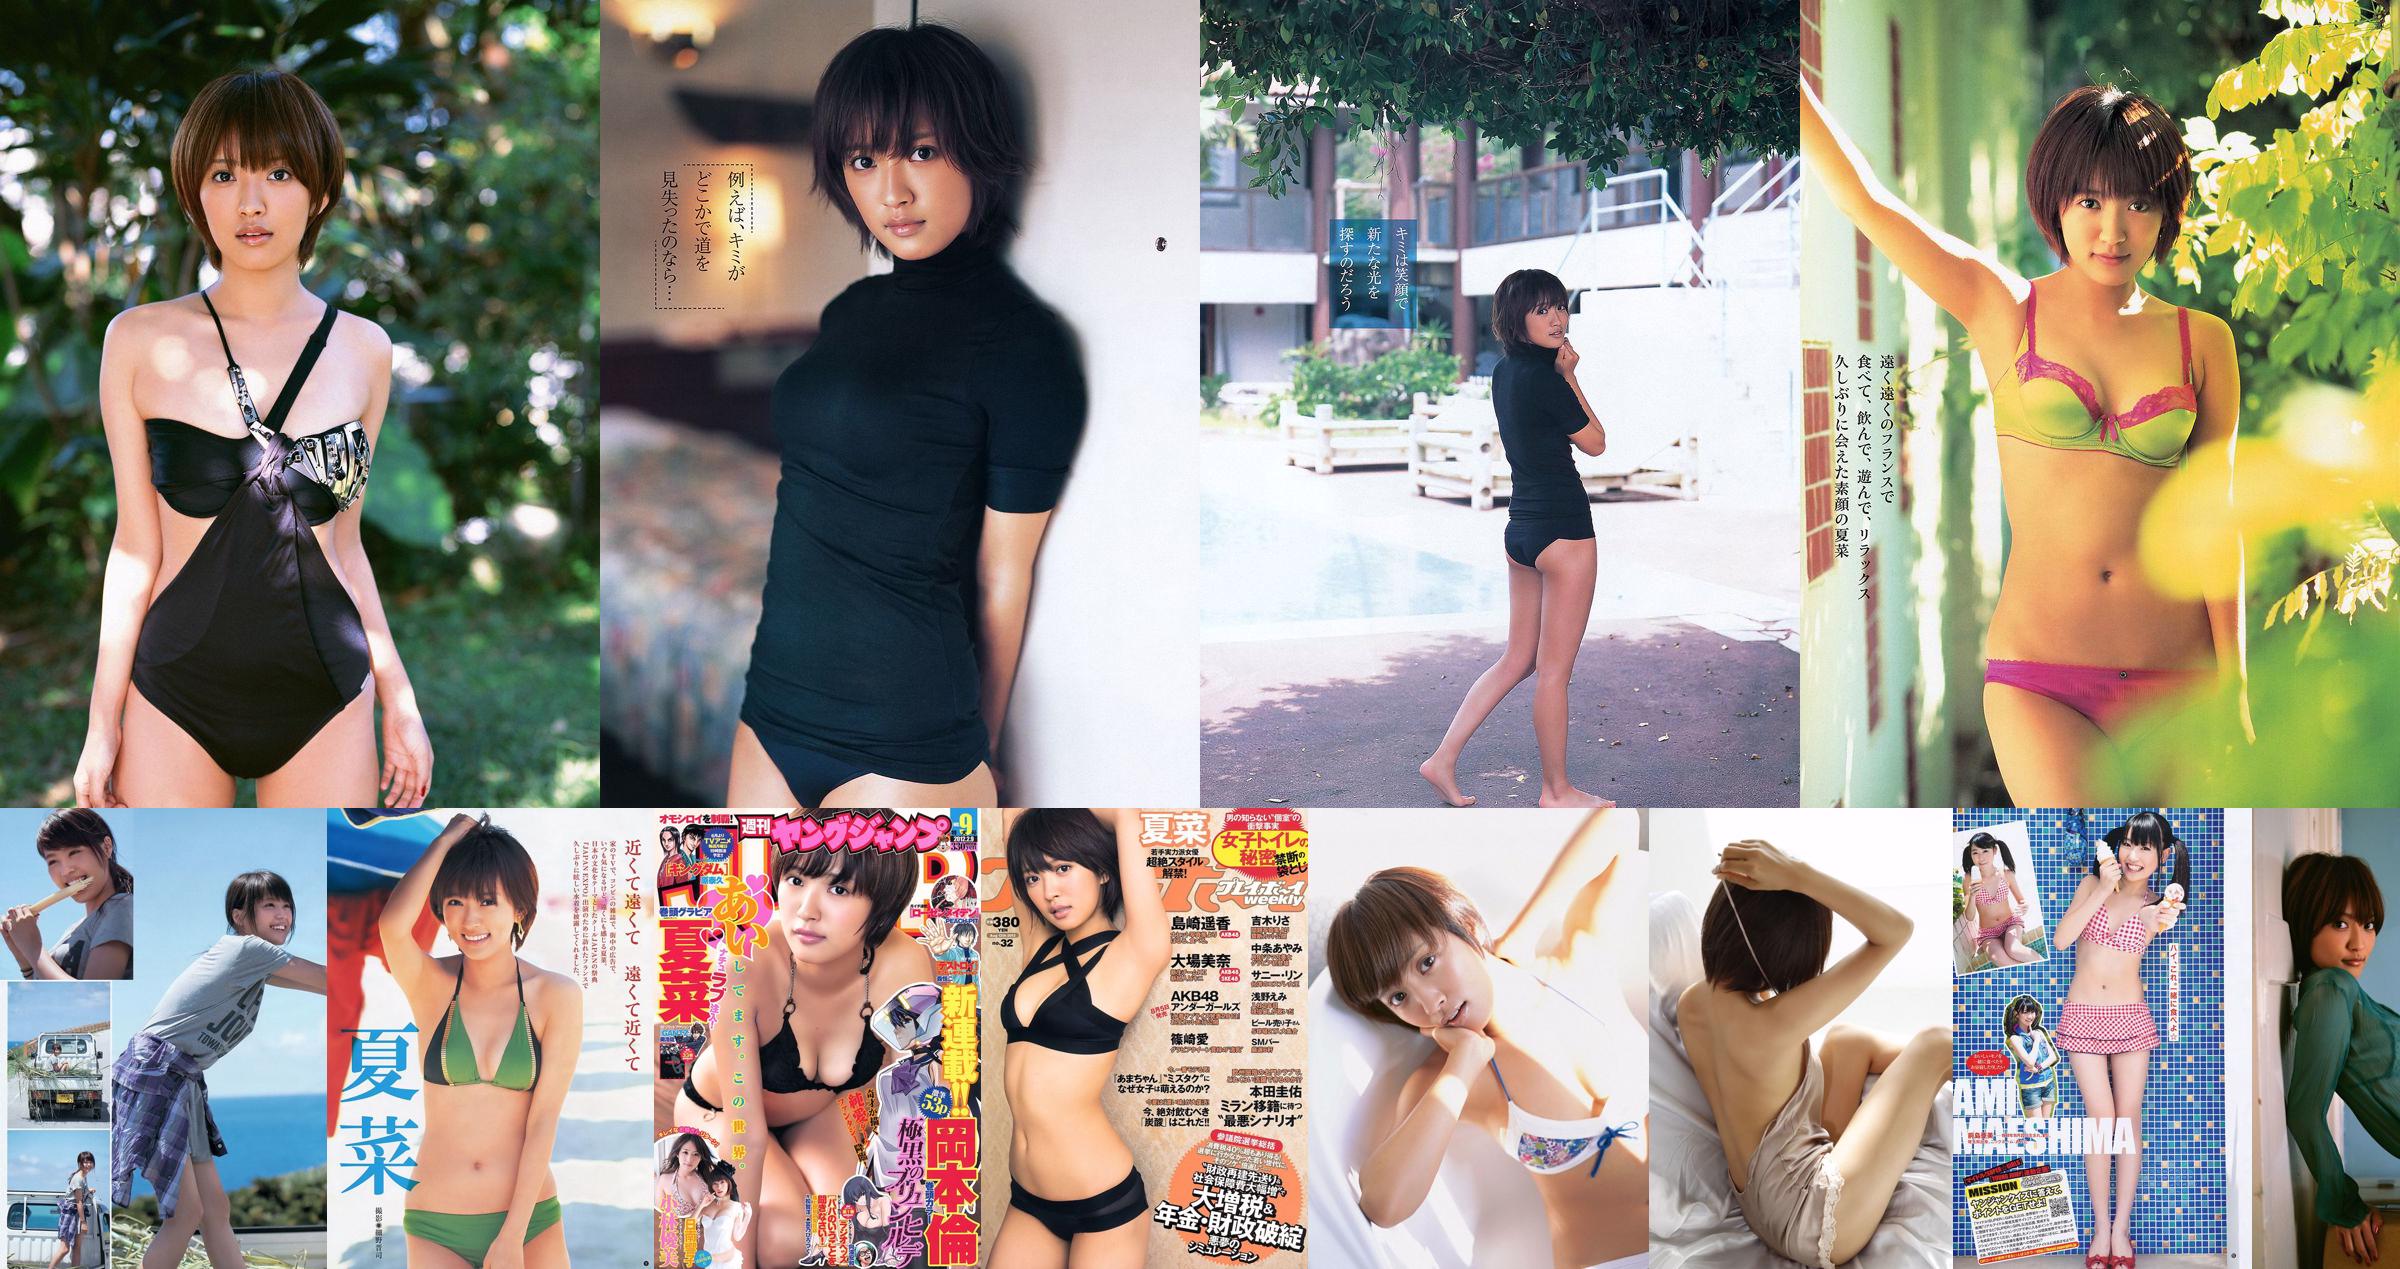 Zomer Naa Kimoto Misaki [Wekelijkse Young Jump] 2013 No.41 Photo Magazine No.131ae1 Pagina 2